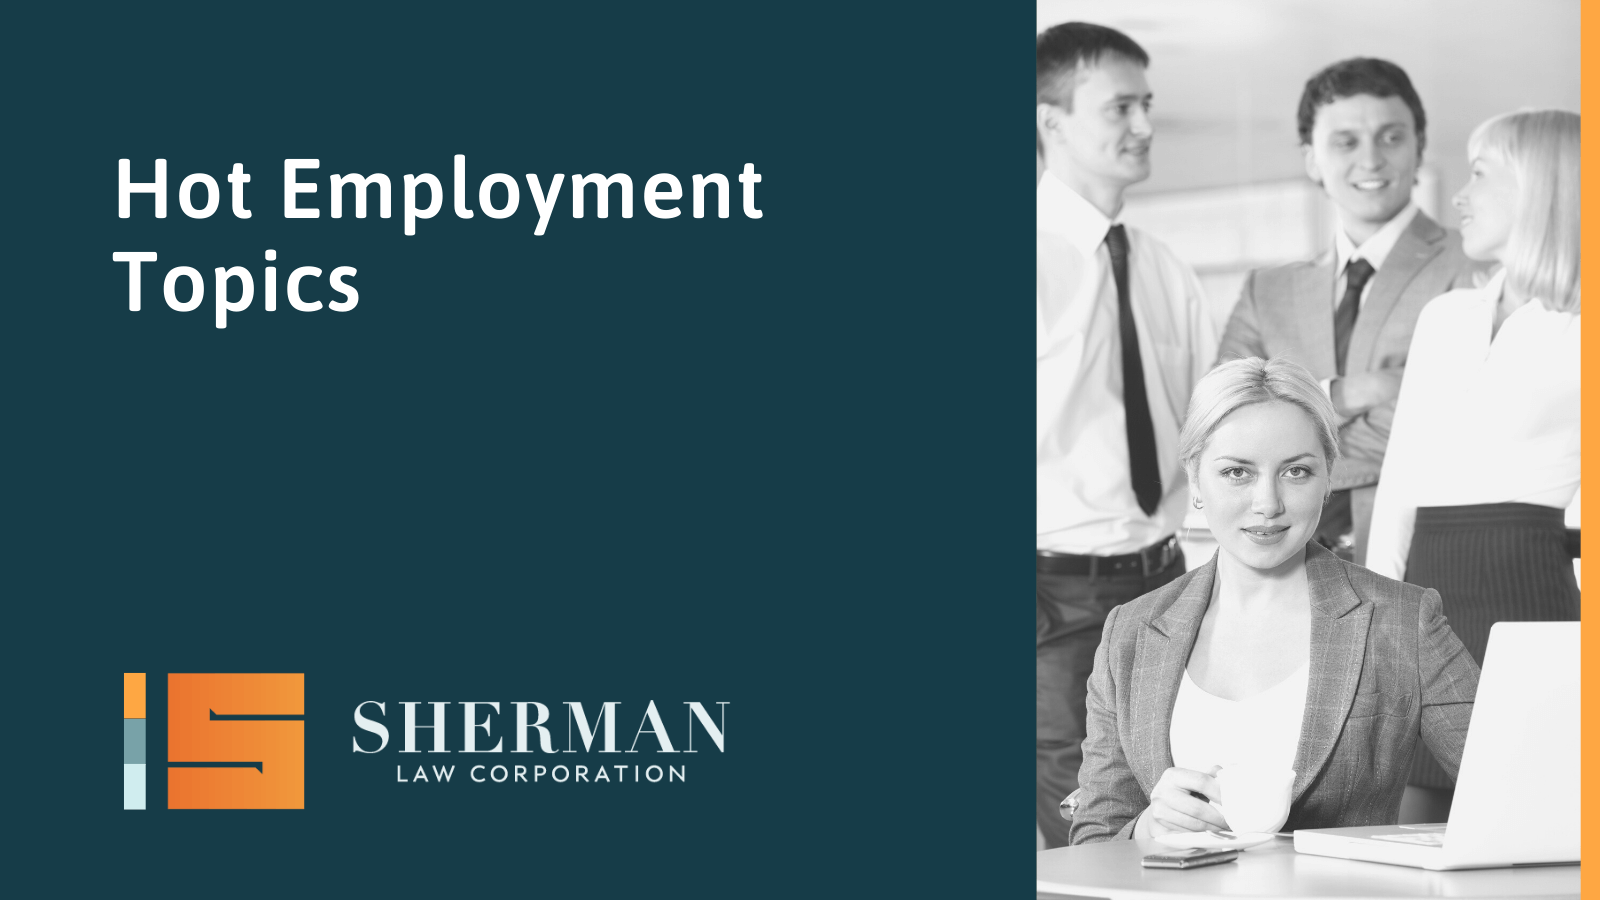 Hot Employment Topics - california employment lawyer - sherman law corporation